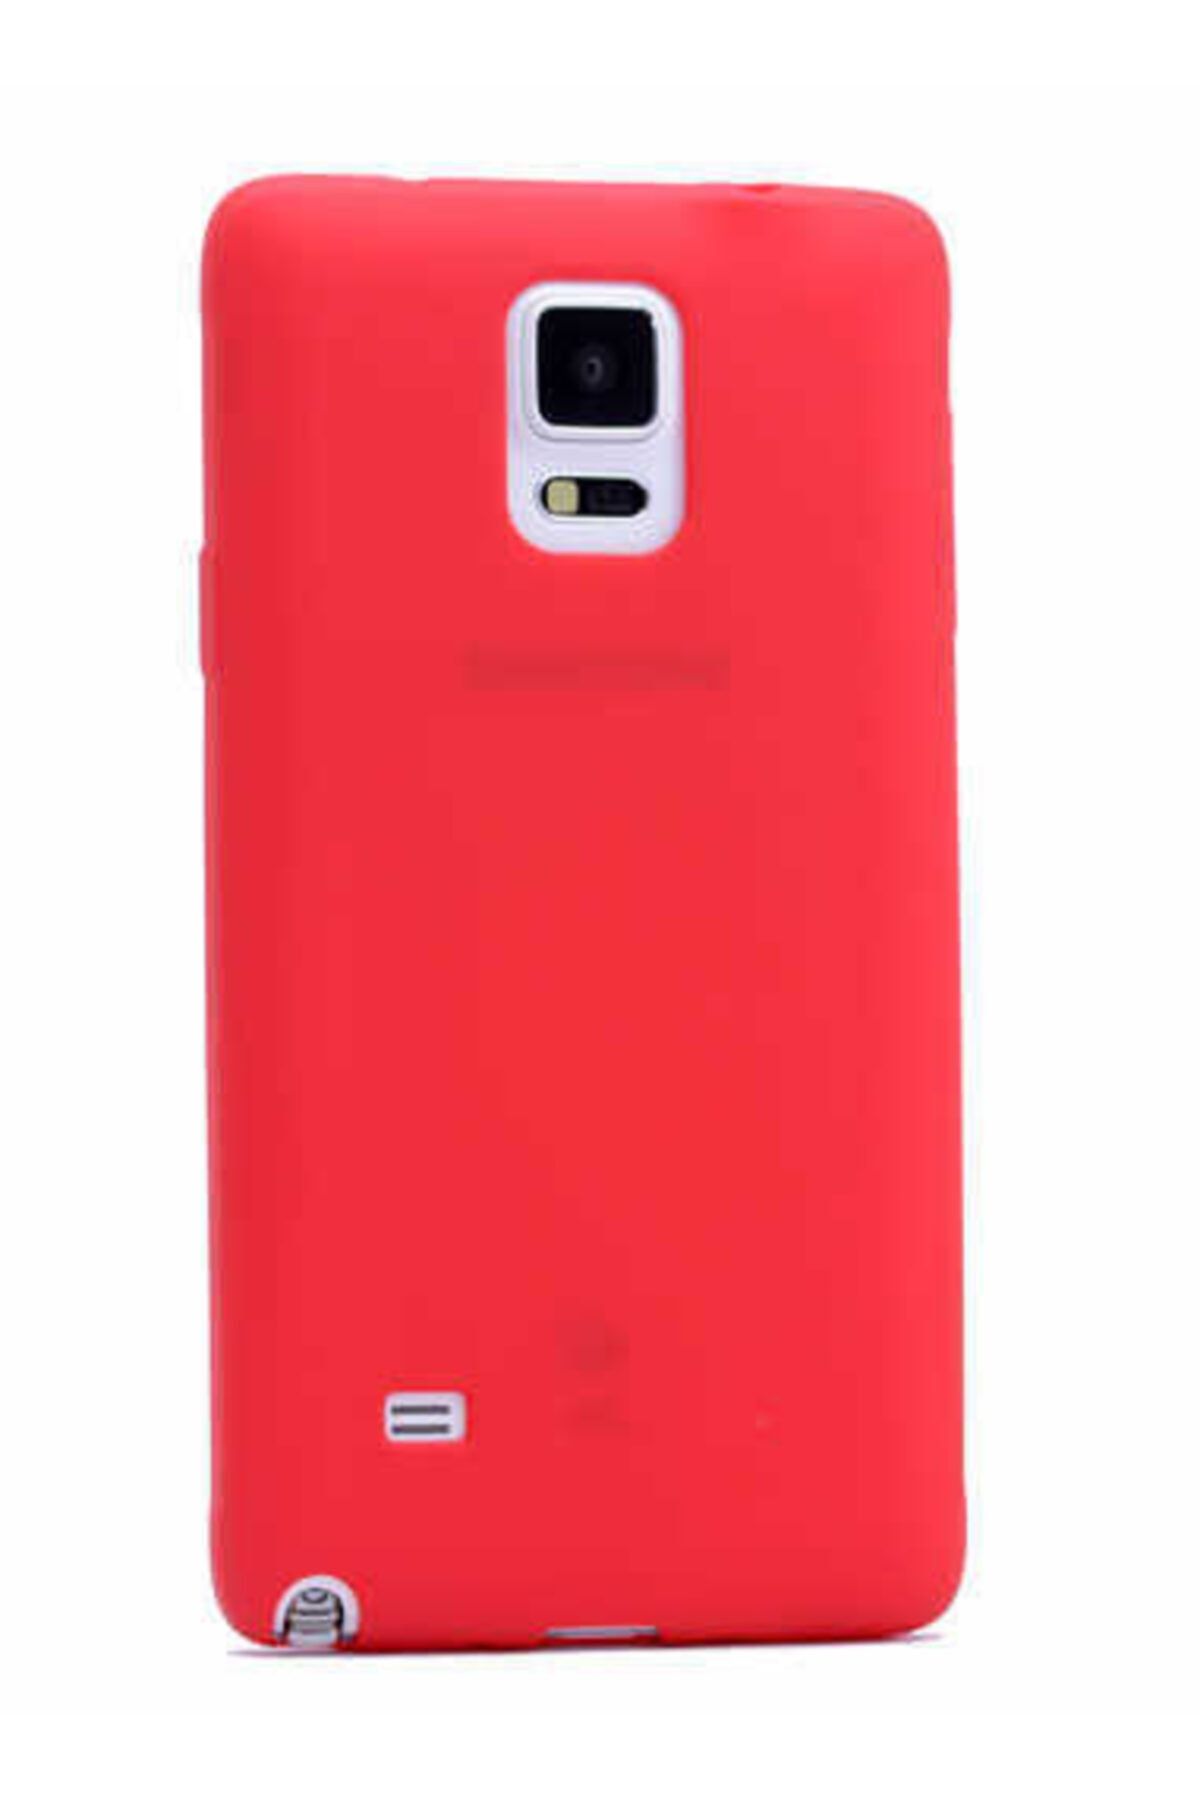 Dijimedia Galaxy Note 4 Kılıf Premier Silikon Kırmızı Kılıf